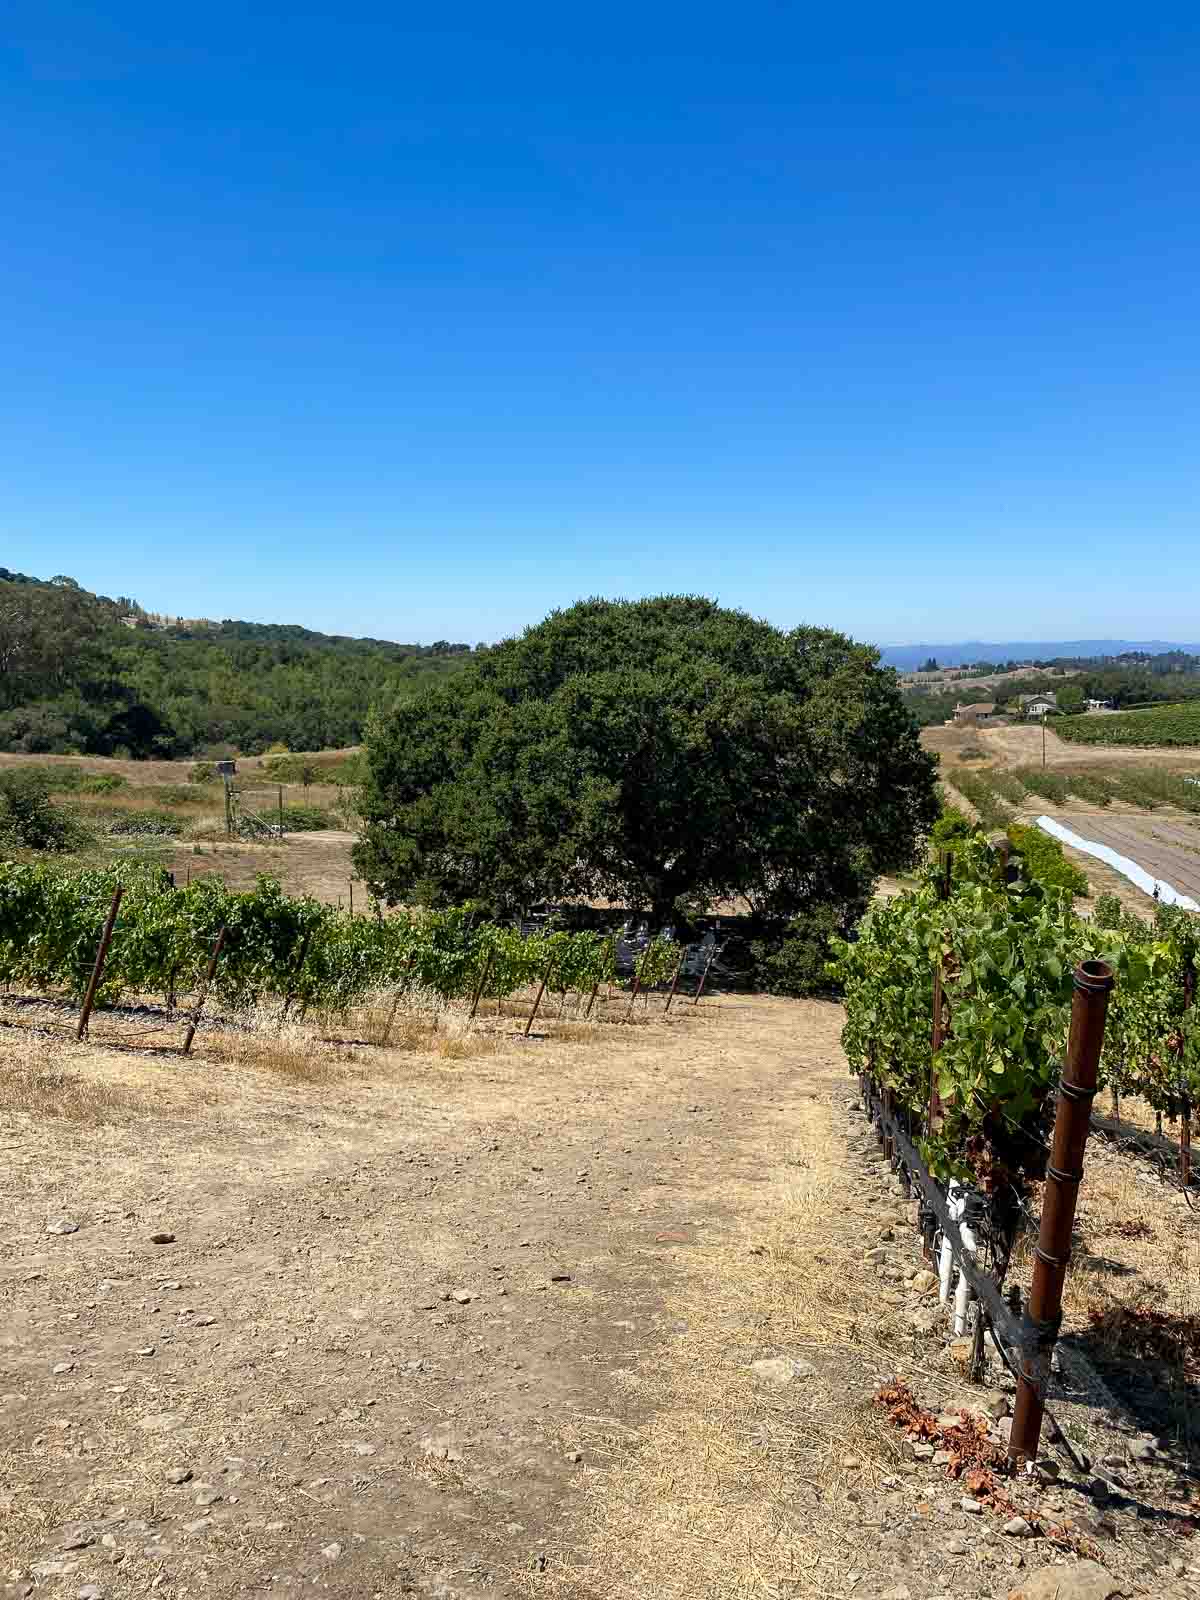 Best Winery near Santa Rosa - Belden Barns